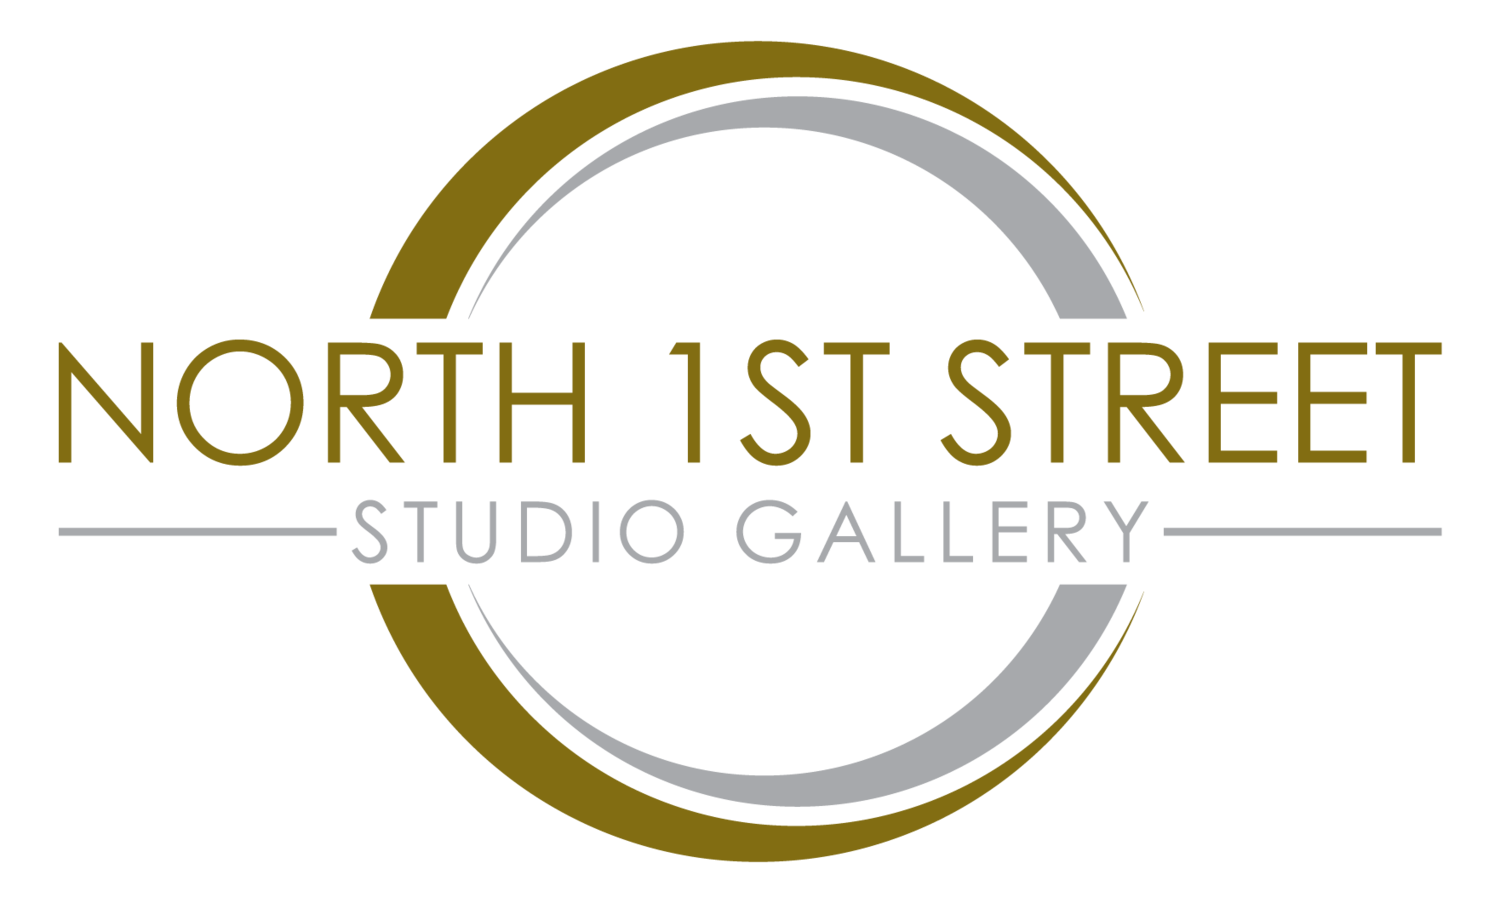 North 1st Street Studio Gallery